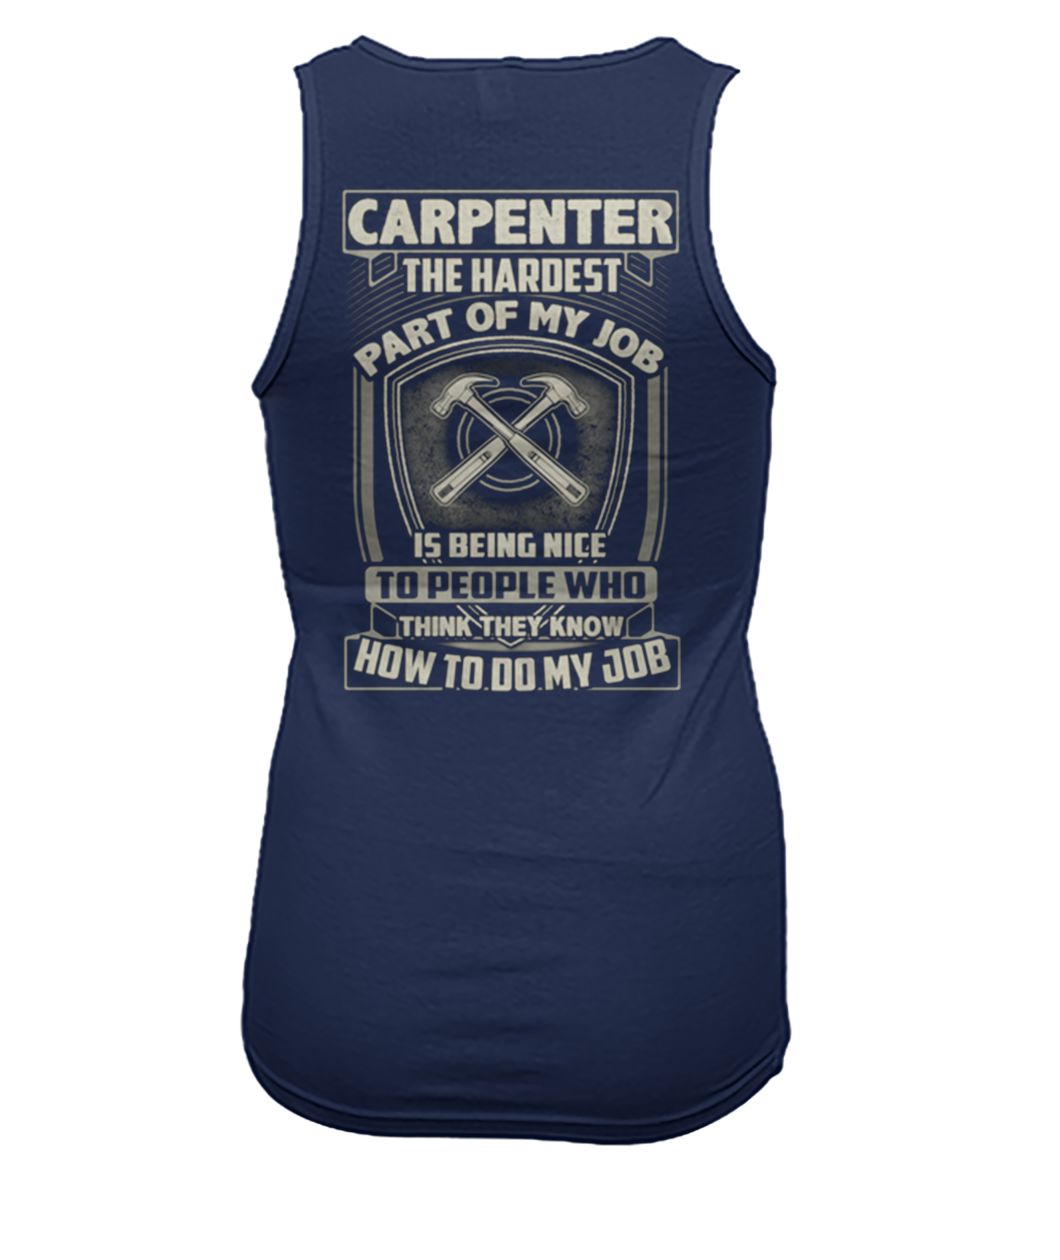 Carpenter the hardest part of my job is being nice women's tank top